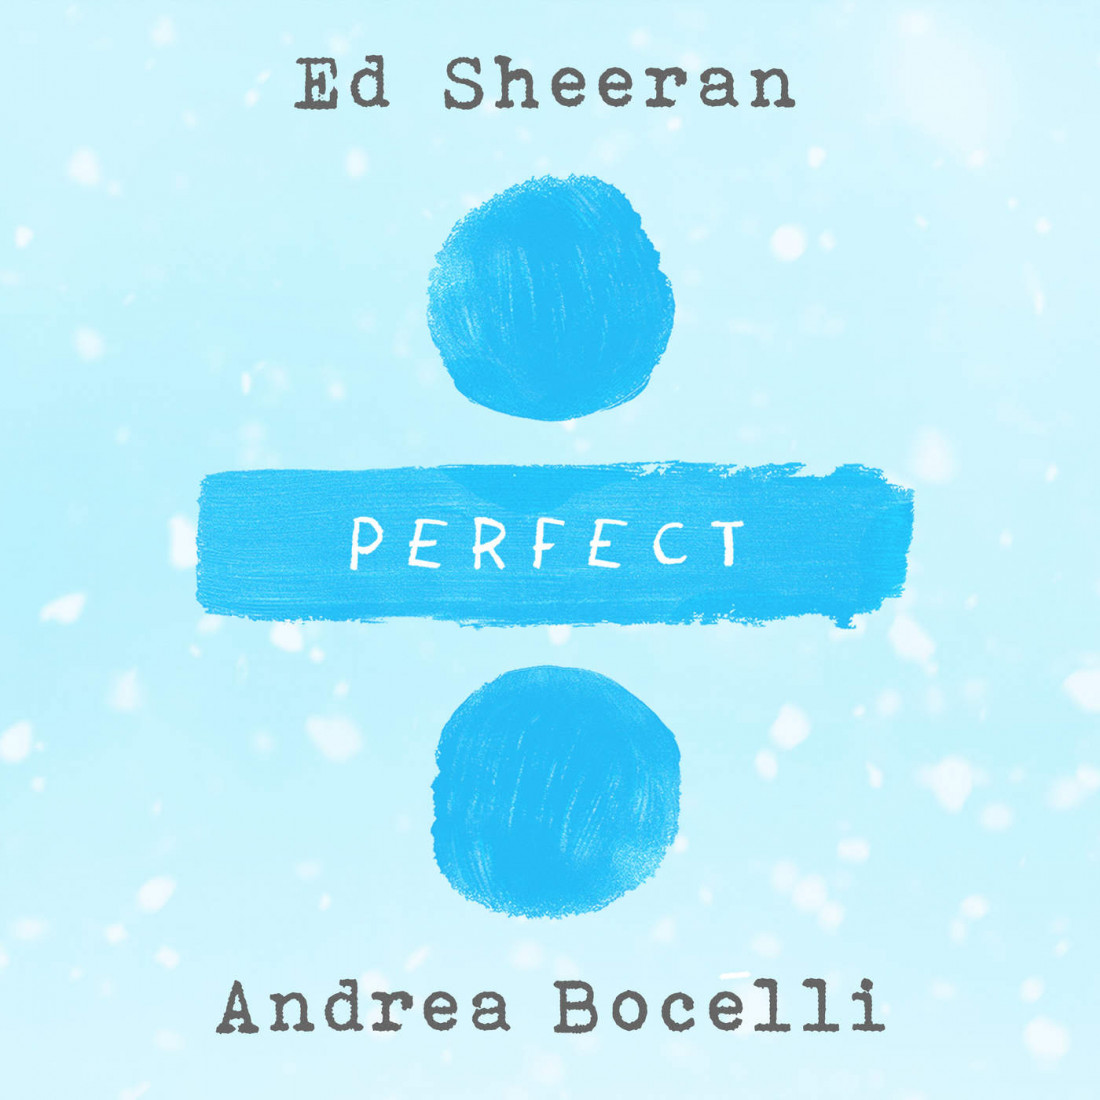 [Ed Sheeran] Perfect Symphony (with Andrea Bocelli) Photo-Image